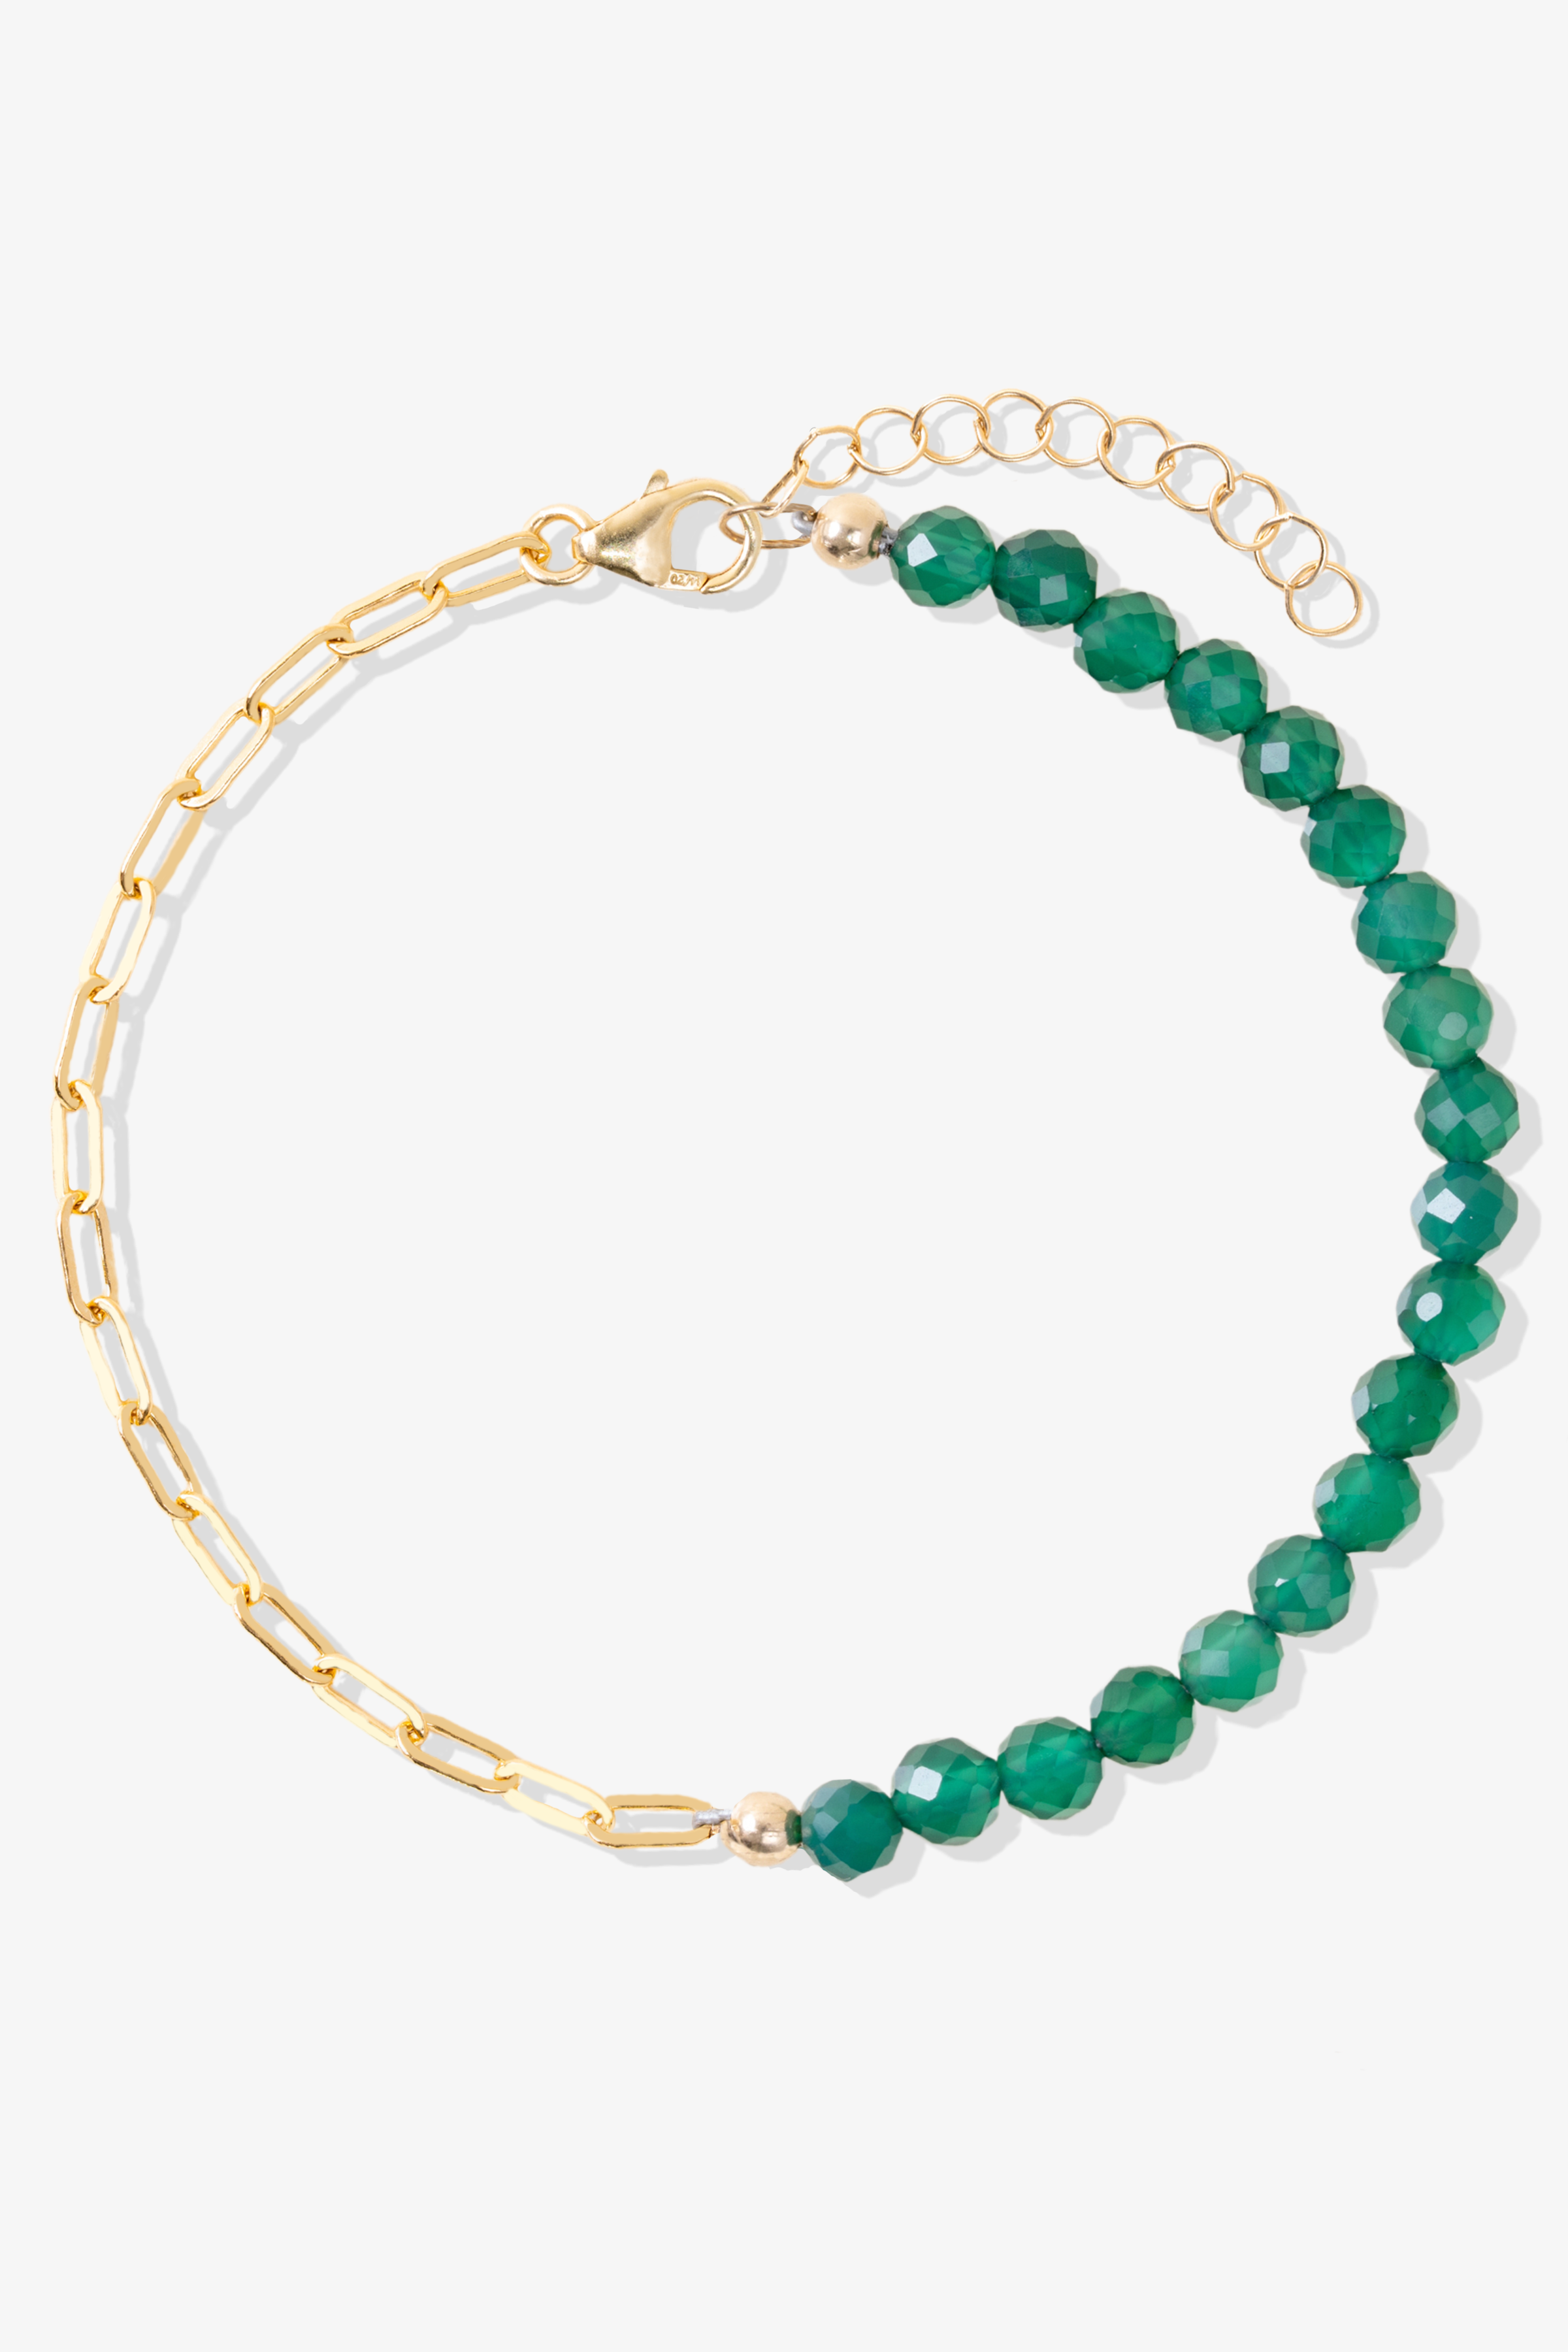 Goddess of Confidence Gold Vermeil Bracelet With Green Aventurine